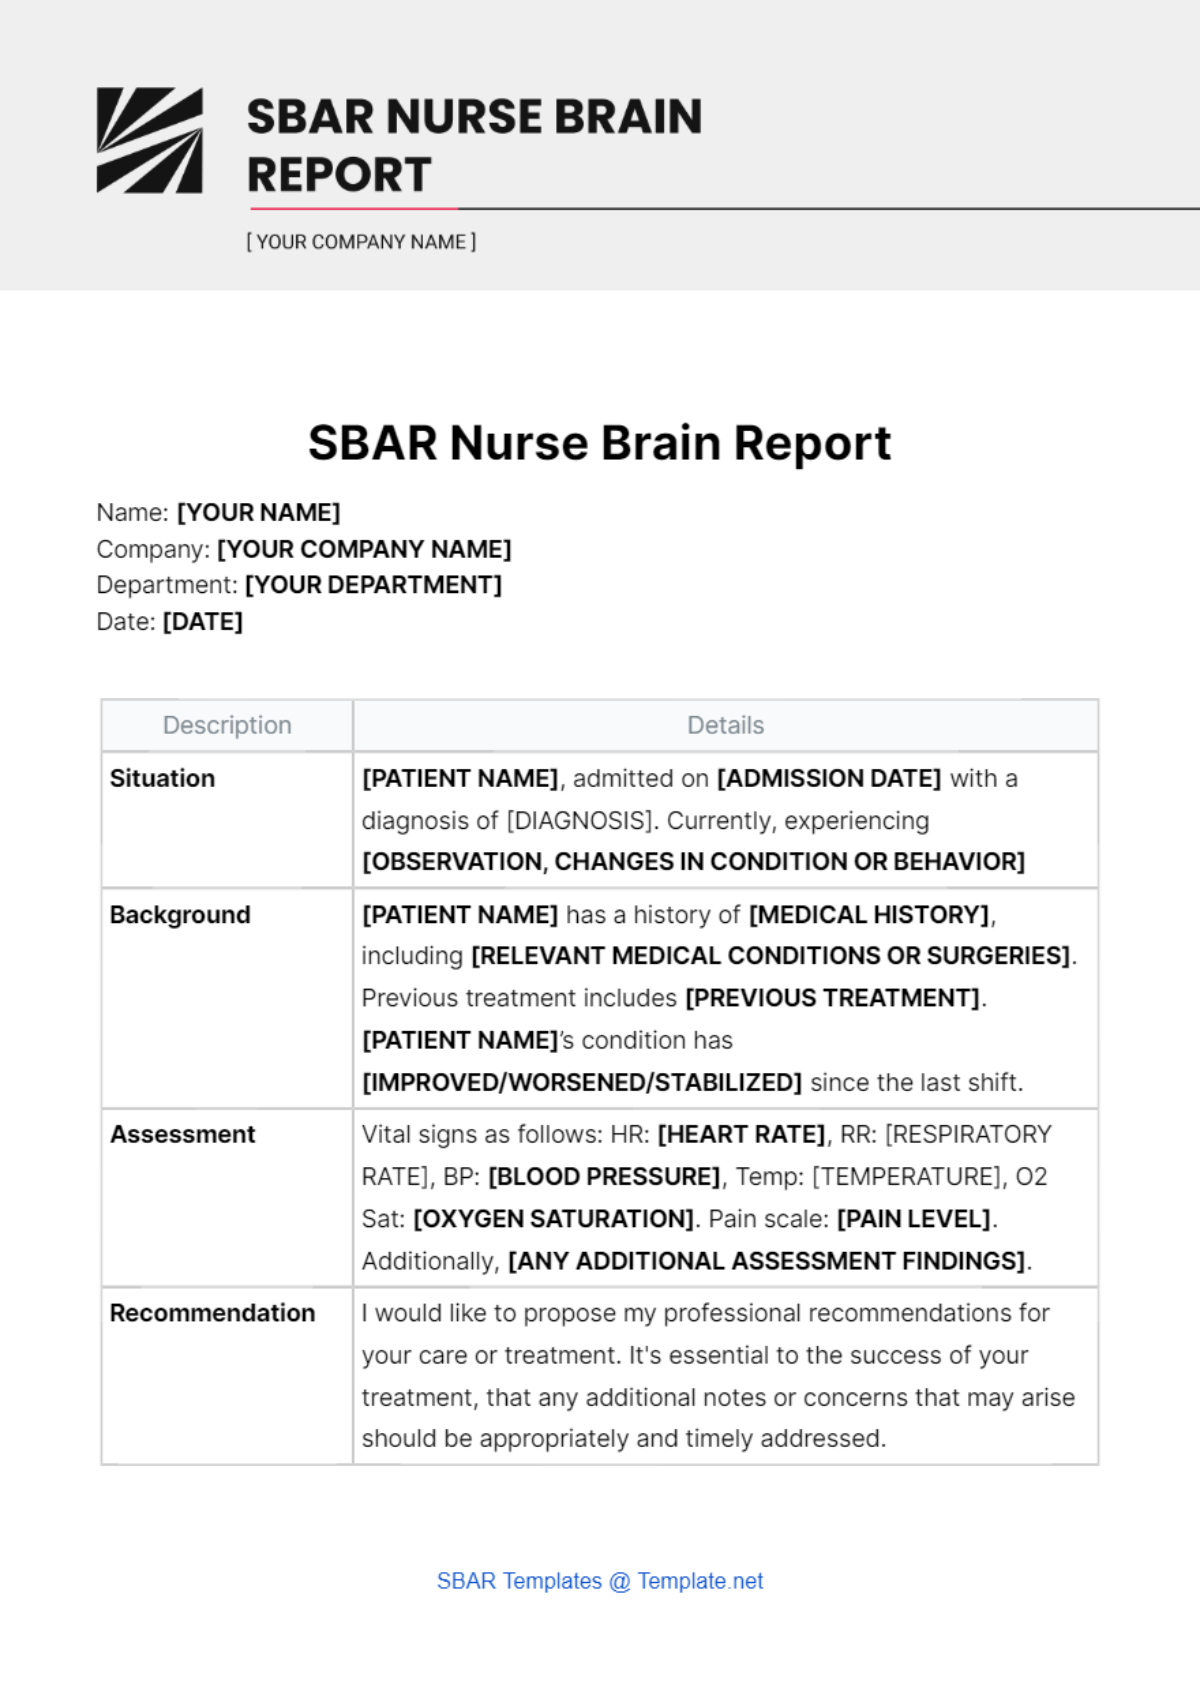 SBAR Nurse Brain Report Template